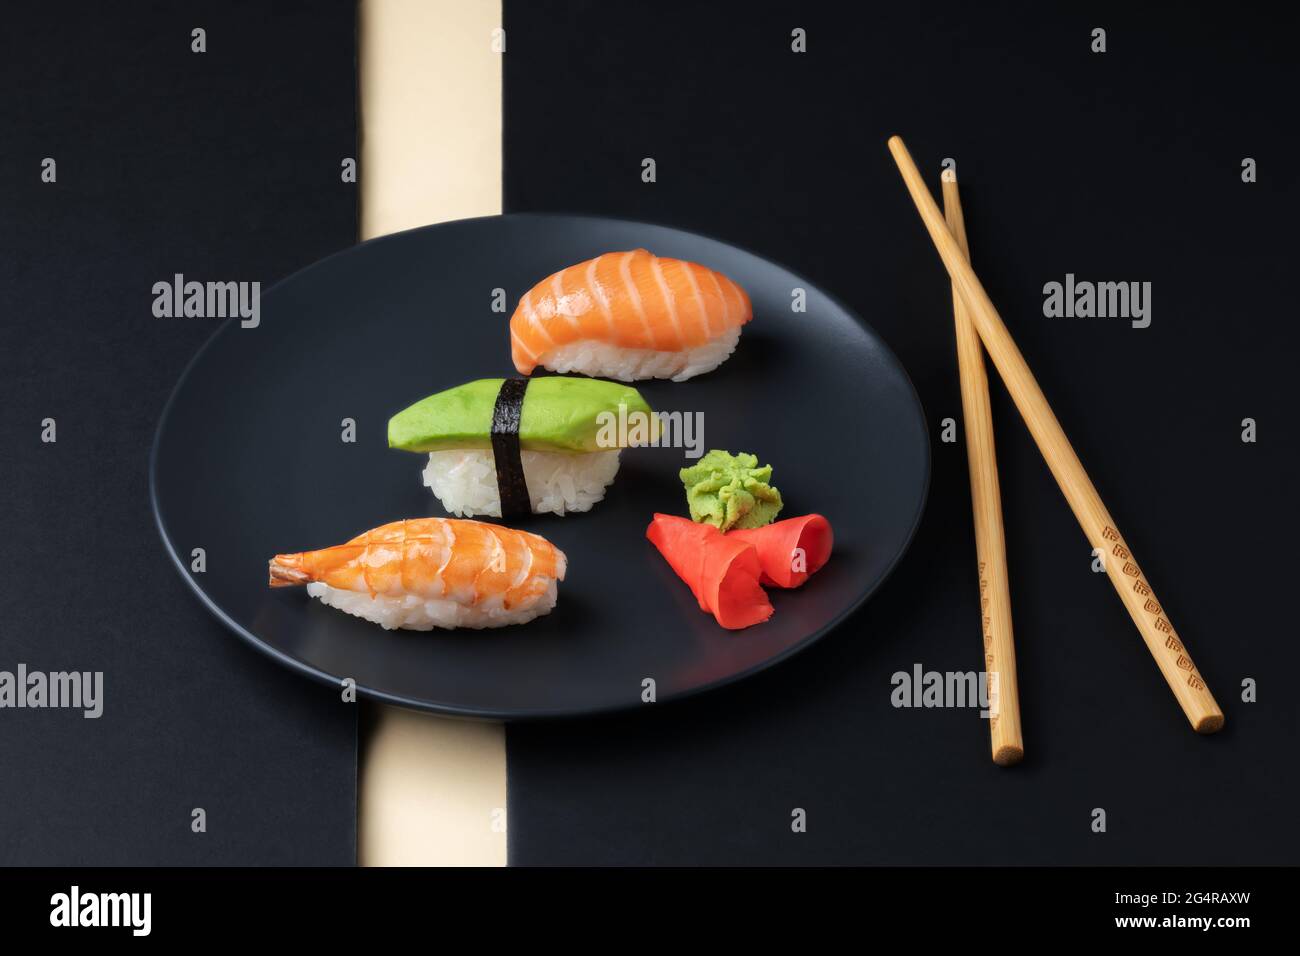 Japanese cuisine - set of nigiri sushi with salmon, avocado and shrimp on a black plate with chopsticks. Stock Photo